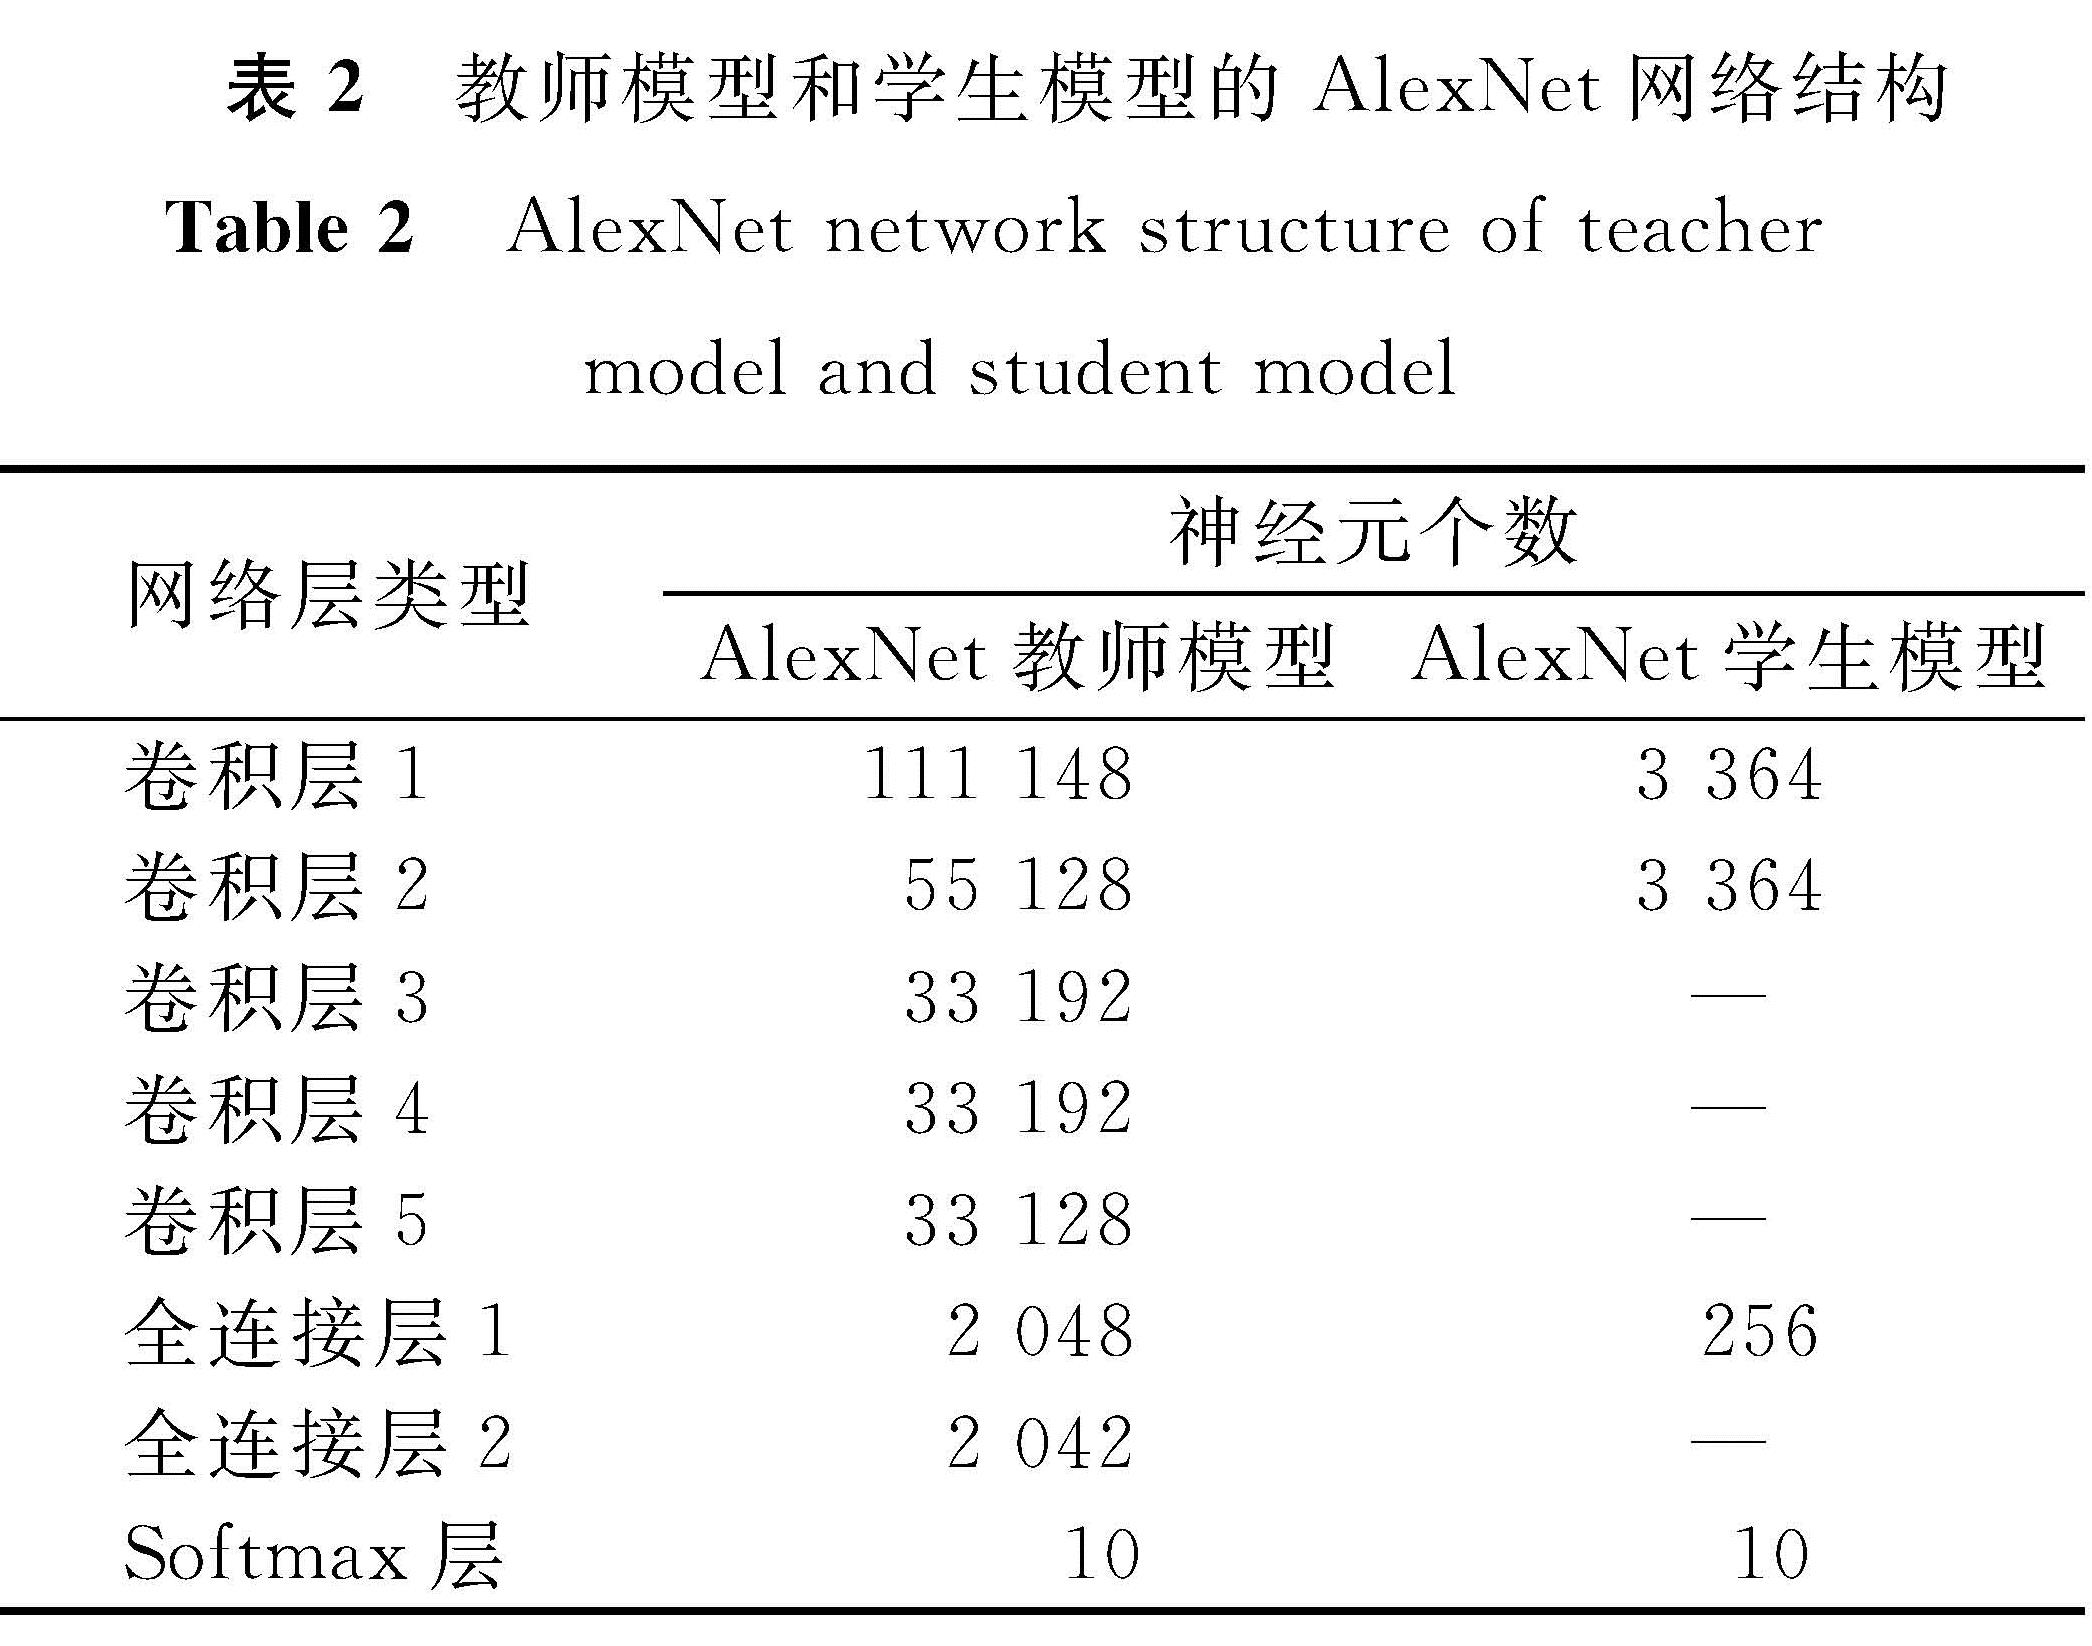 表2 教师模型和学生模型的AlexNet网络结构<br/>Table 2 AlexNet network structure of teacher model and student model